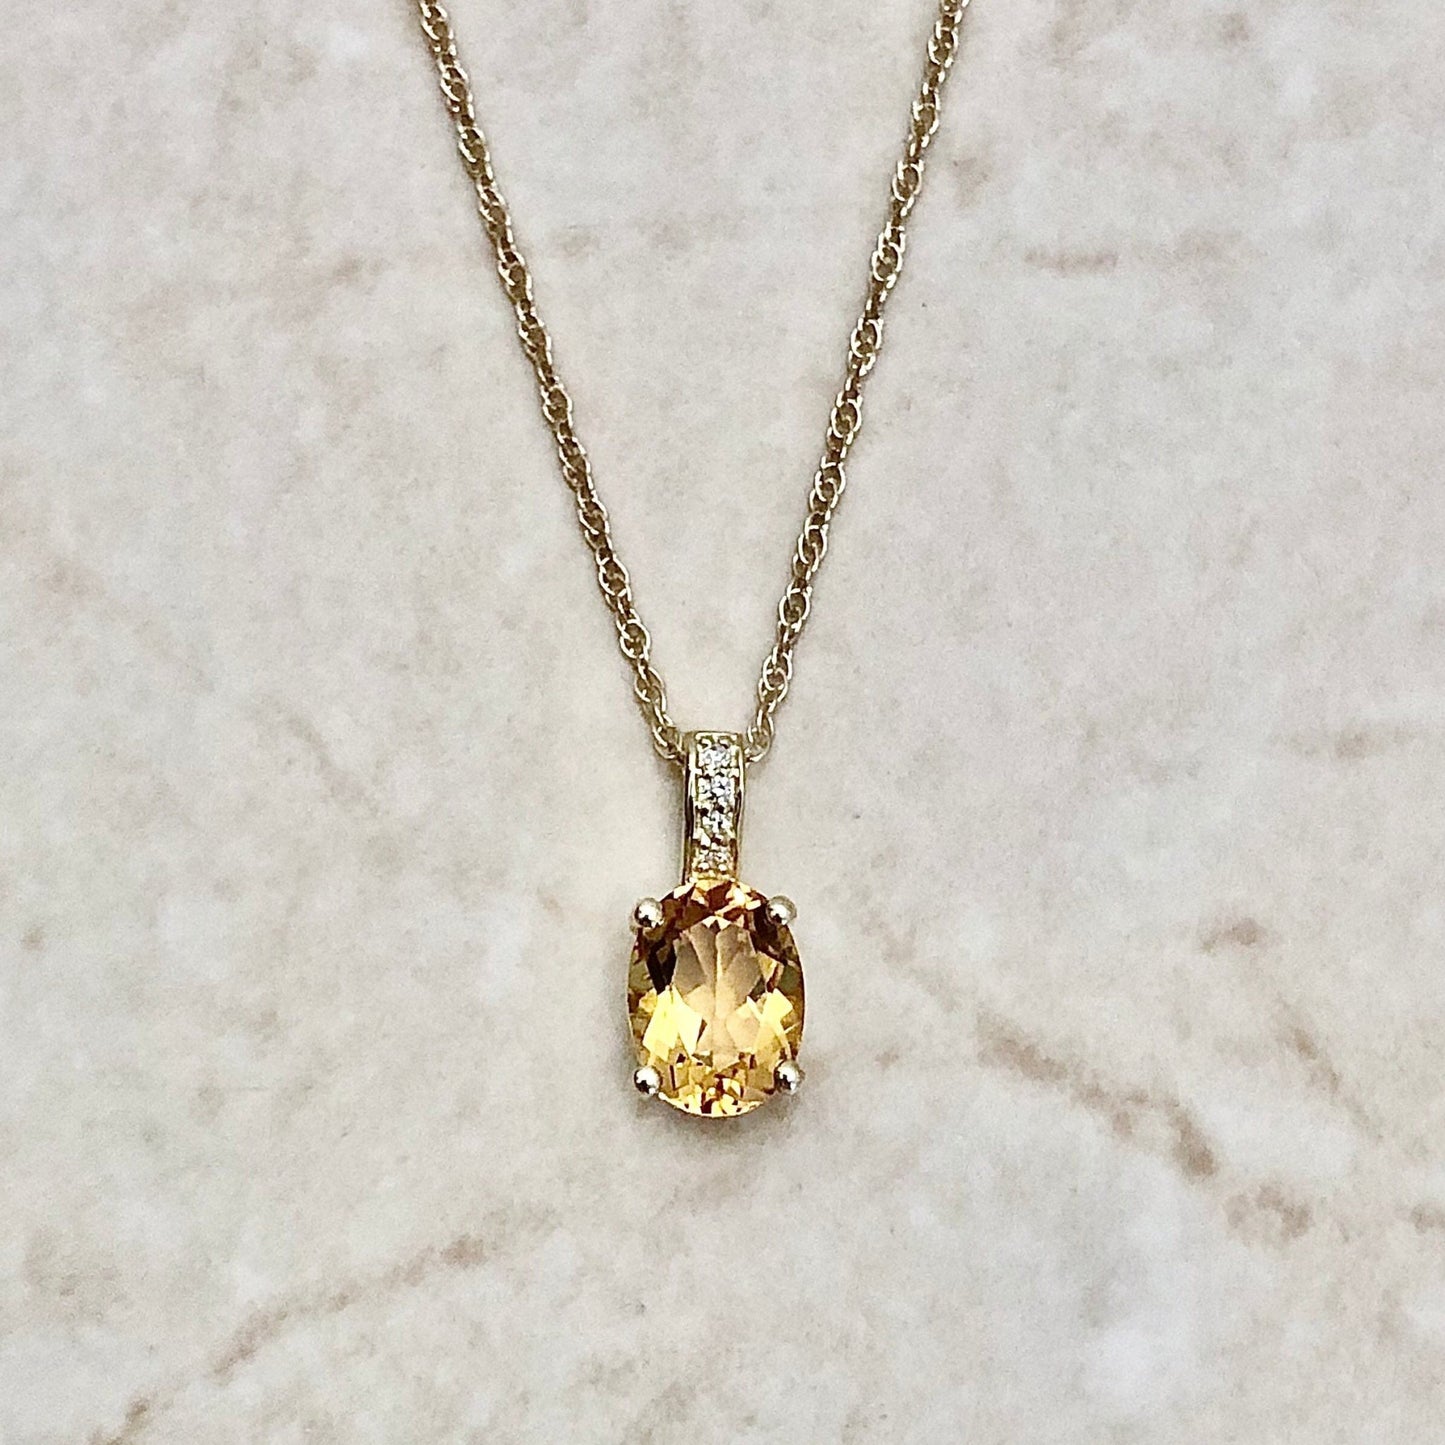 Citrine & Diamond Pendant Necklace - 14K Yellow Gold Pendant - November Birthstone - Genuine Gemstone - Birthday Gift - Best Gift For Her